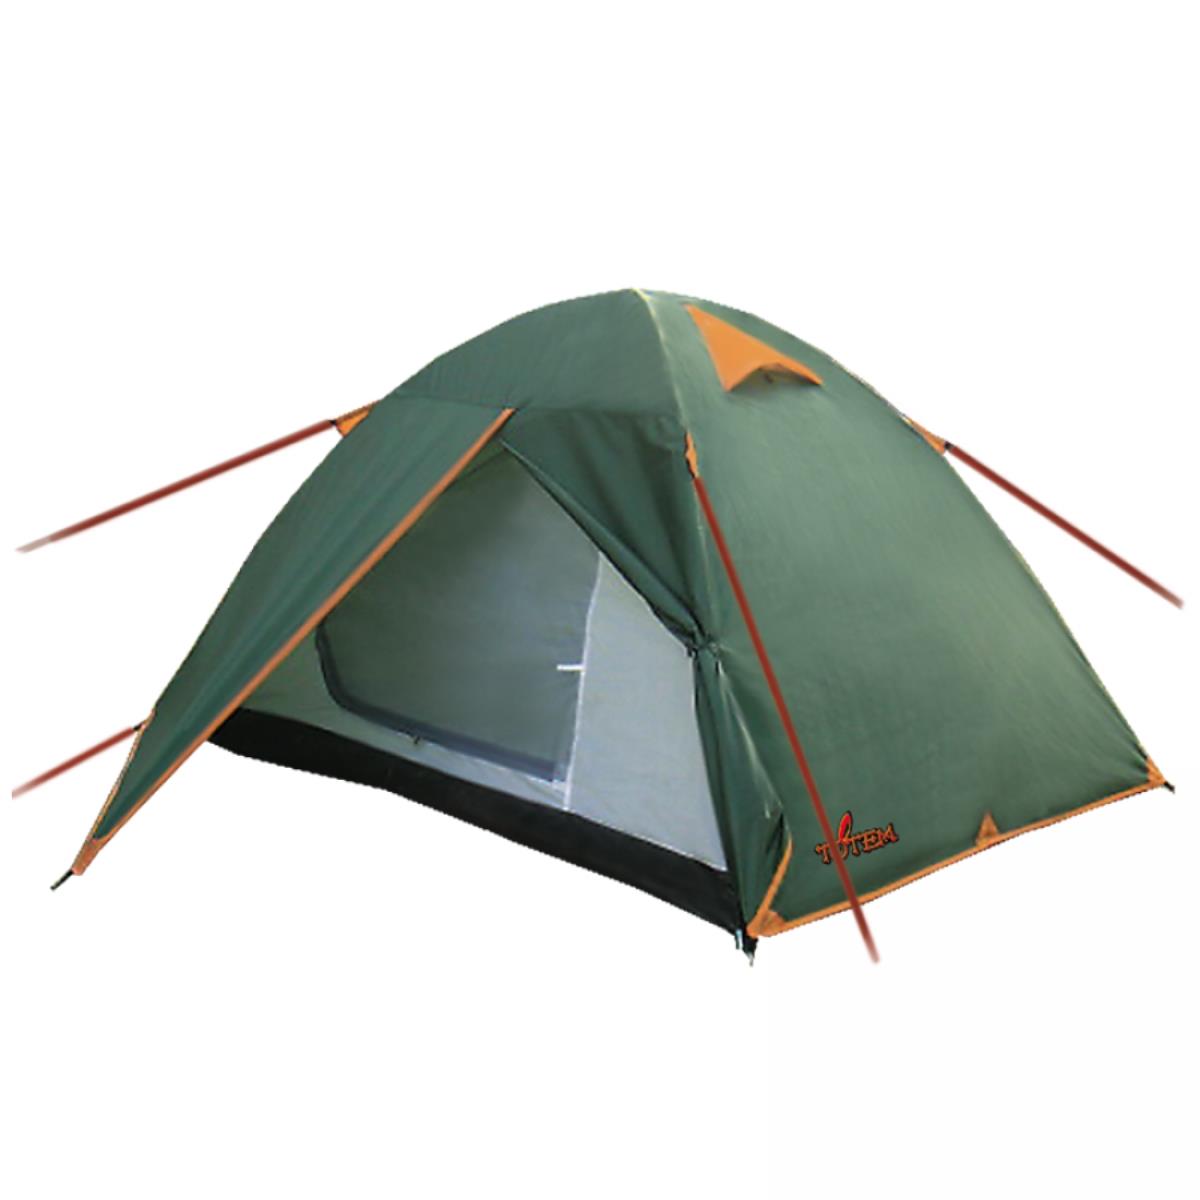 Палатка Tepee 2 V2 зеленый (TTT-020) Totem универсальная двухслойная палатка куб 2 20 м камыш берег